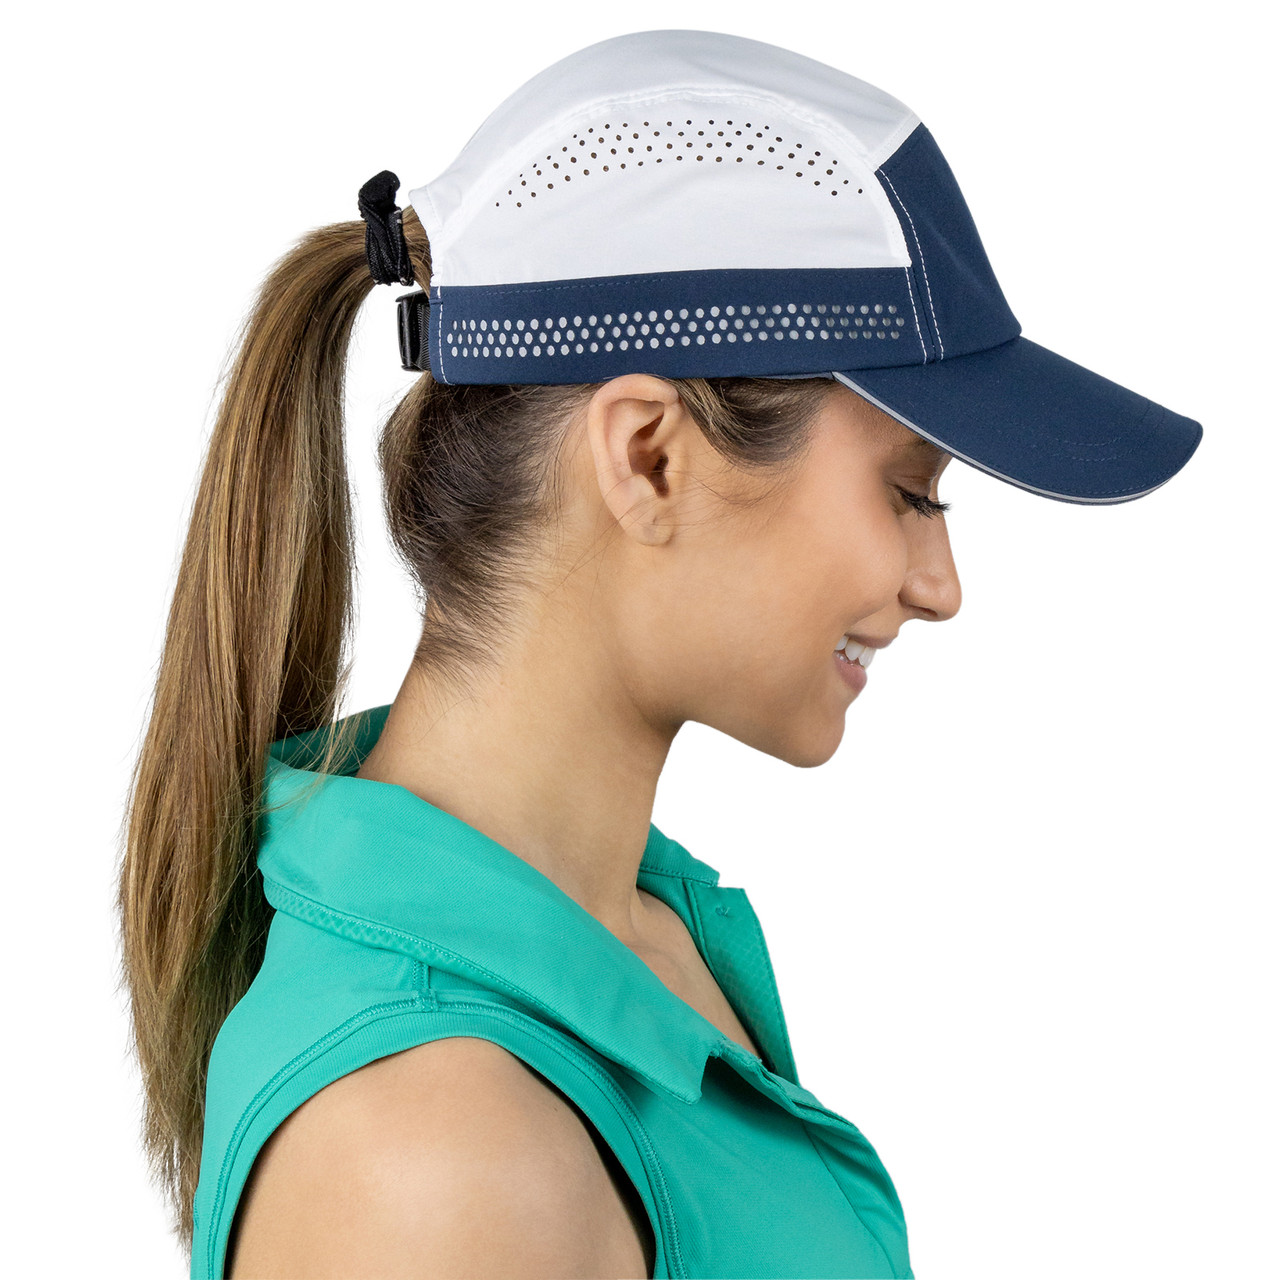 TrailHeads Women’s Running Hat - Recycled Sports Cap - Traverse Series